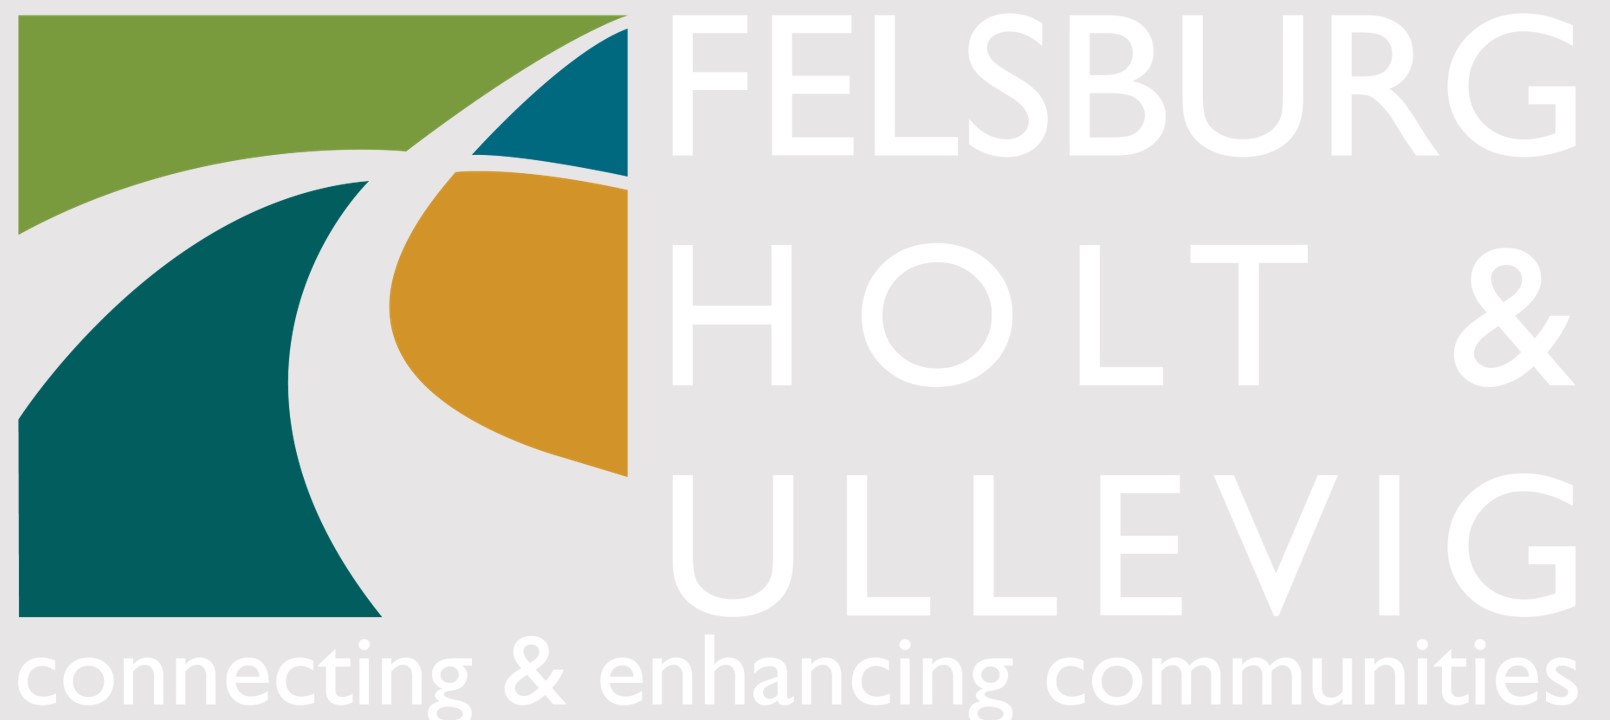 Felsburg Holt & Ullevig